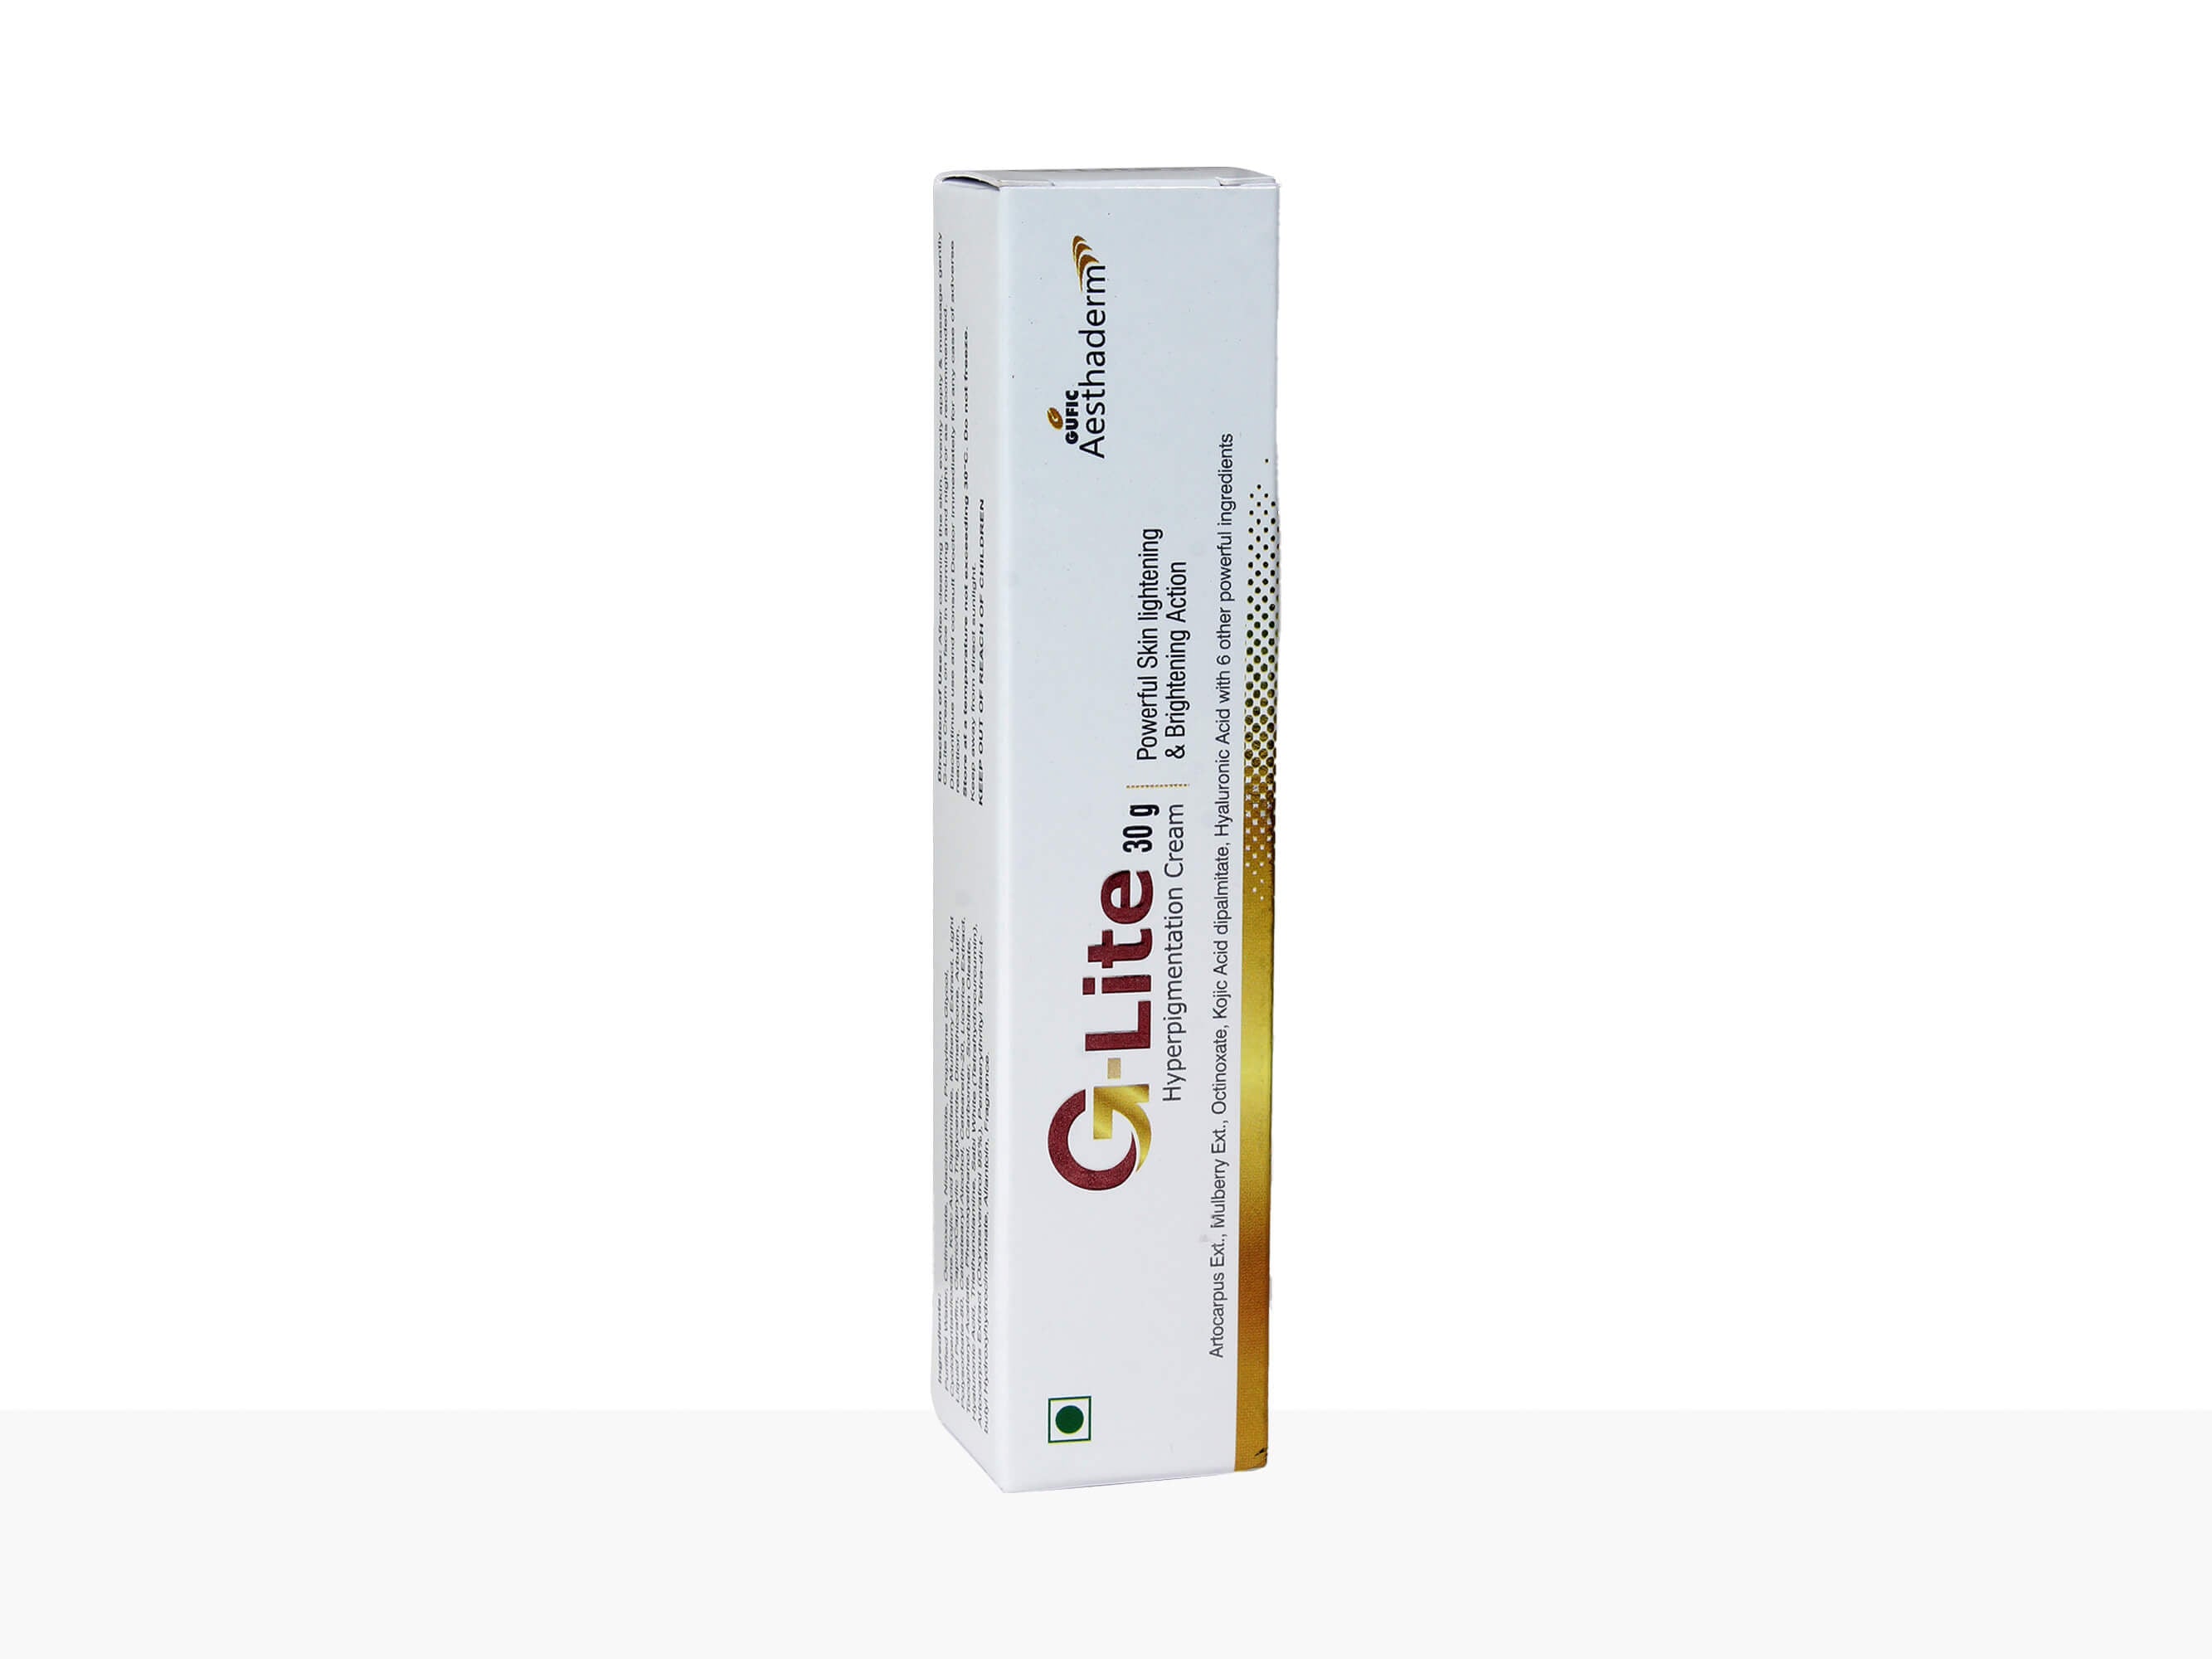 G-Lite Hyperpigmentation Cream - Clinikally